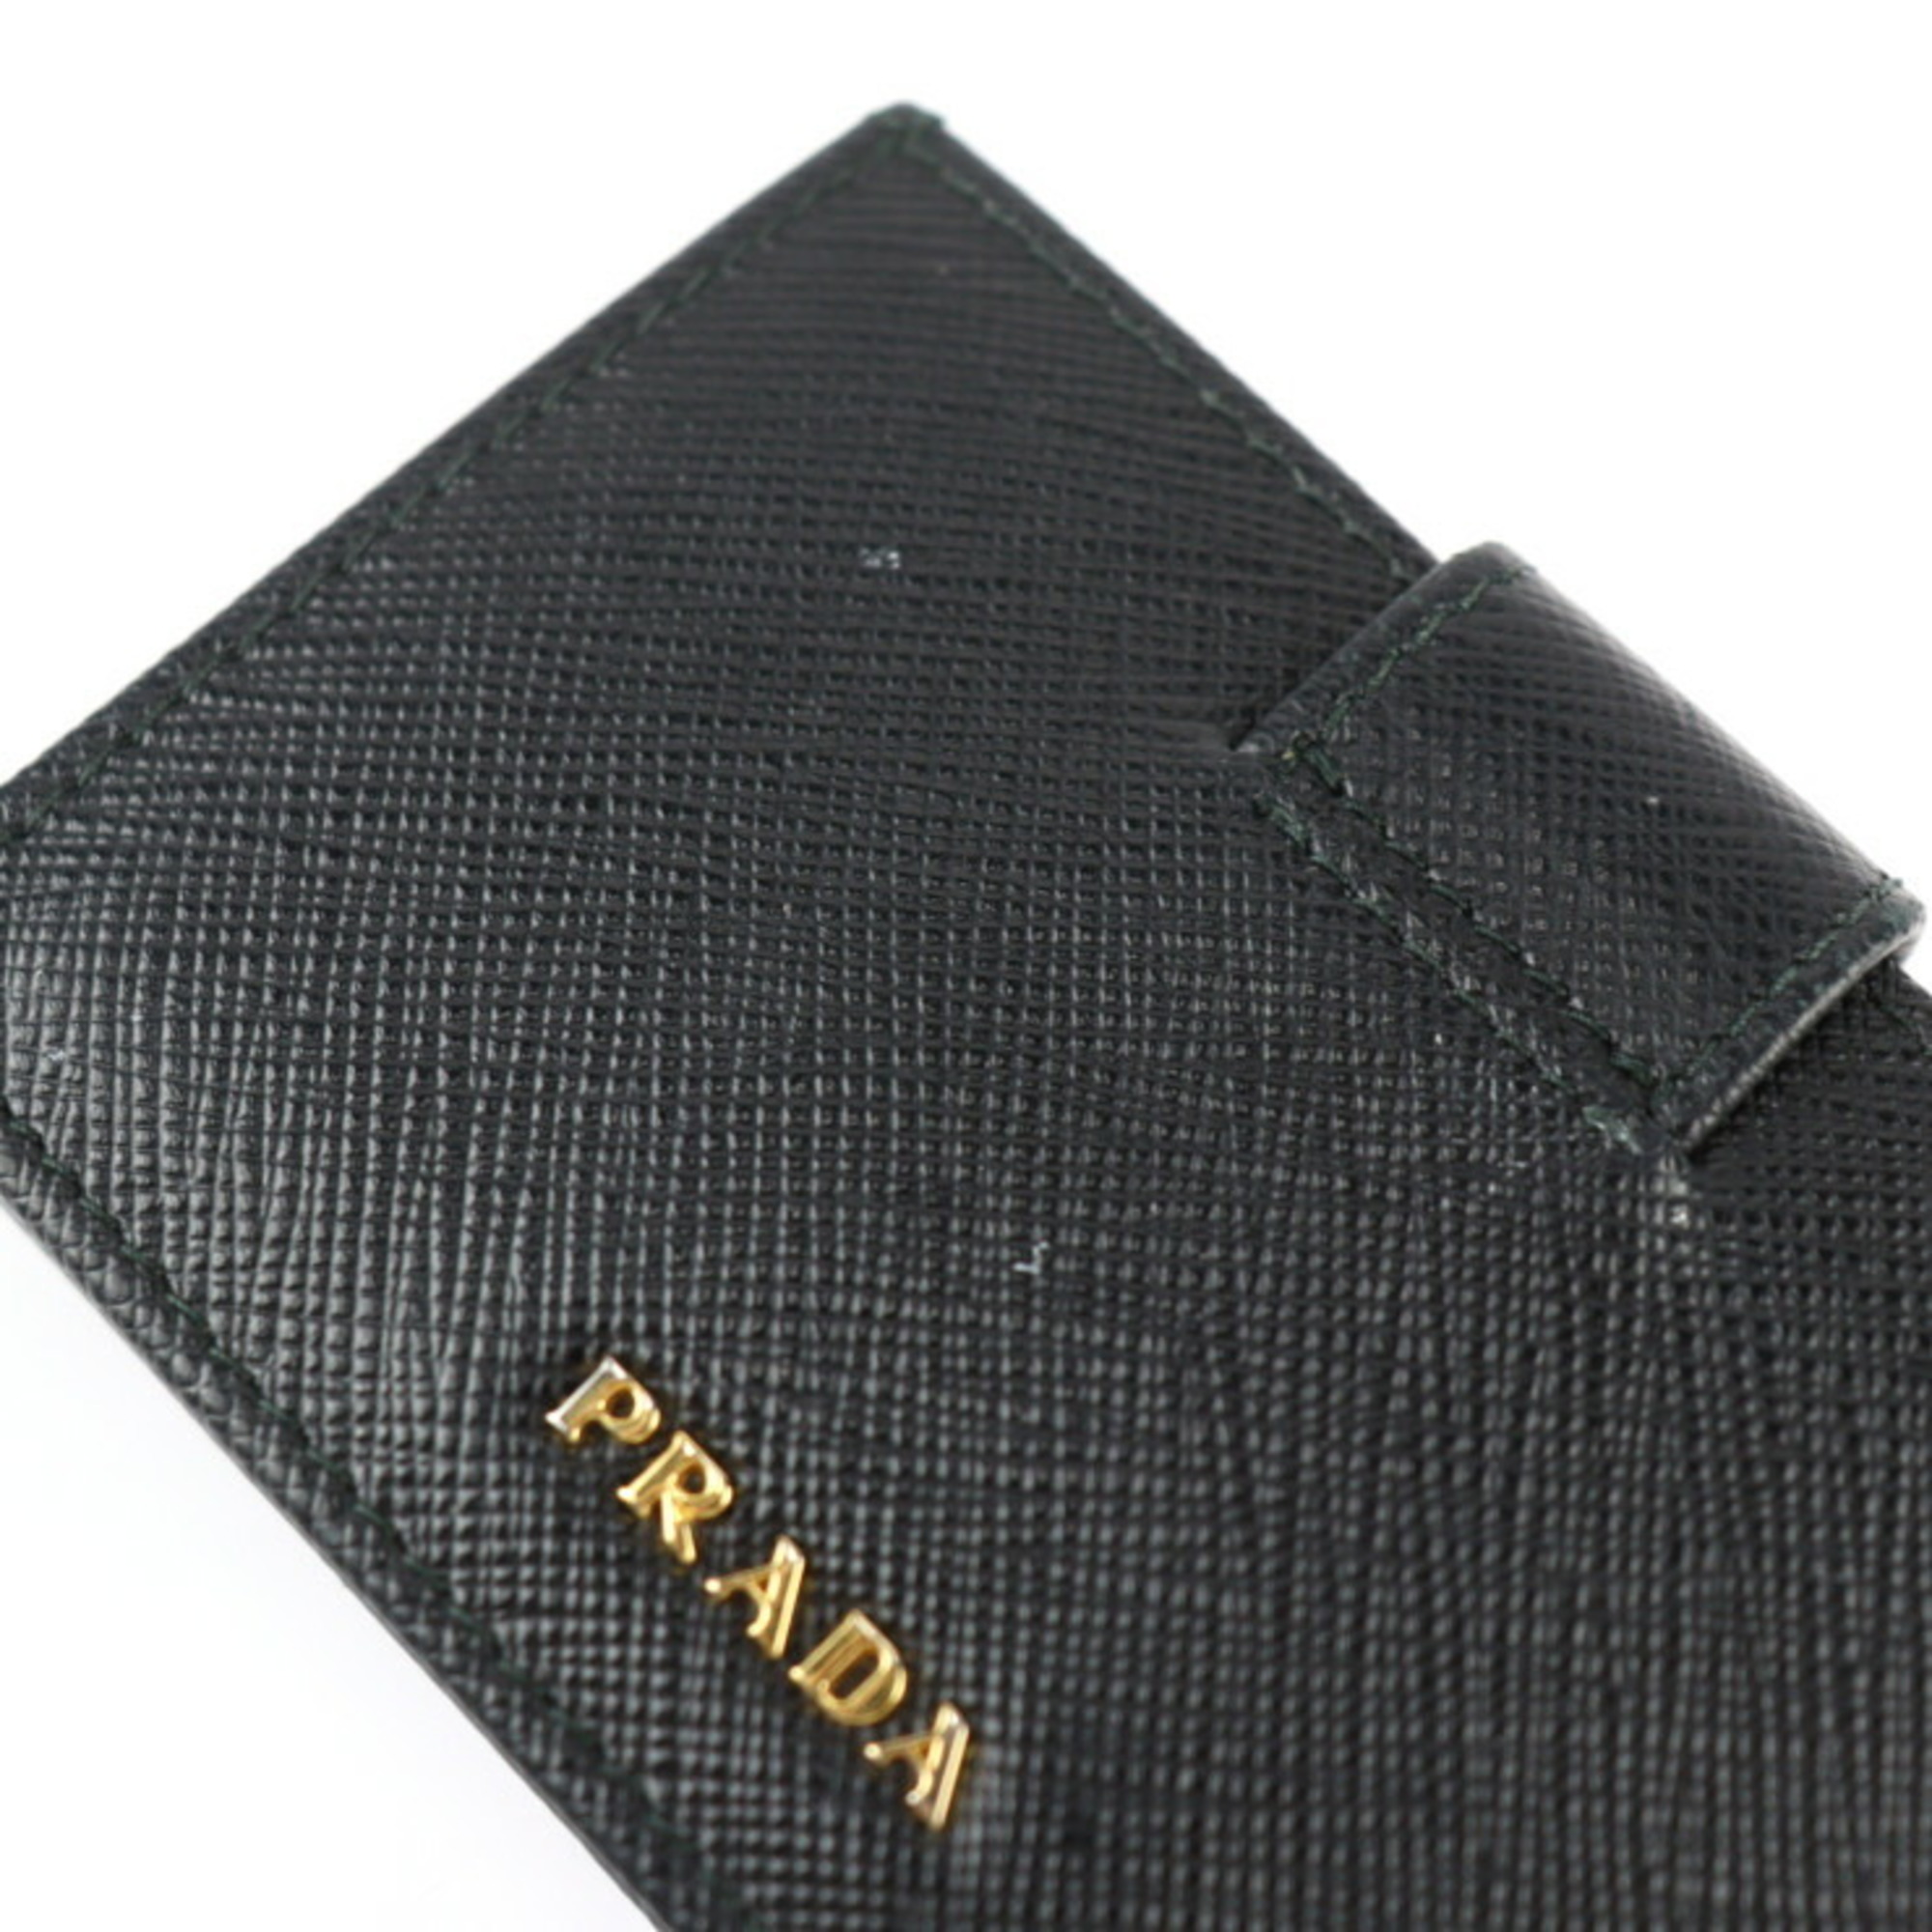 PRADA Saffiano Metal Card Case 1MC211 Leather Black Business Holder